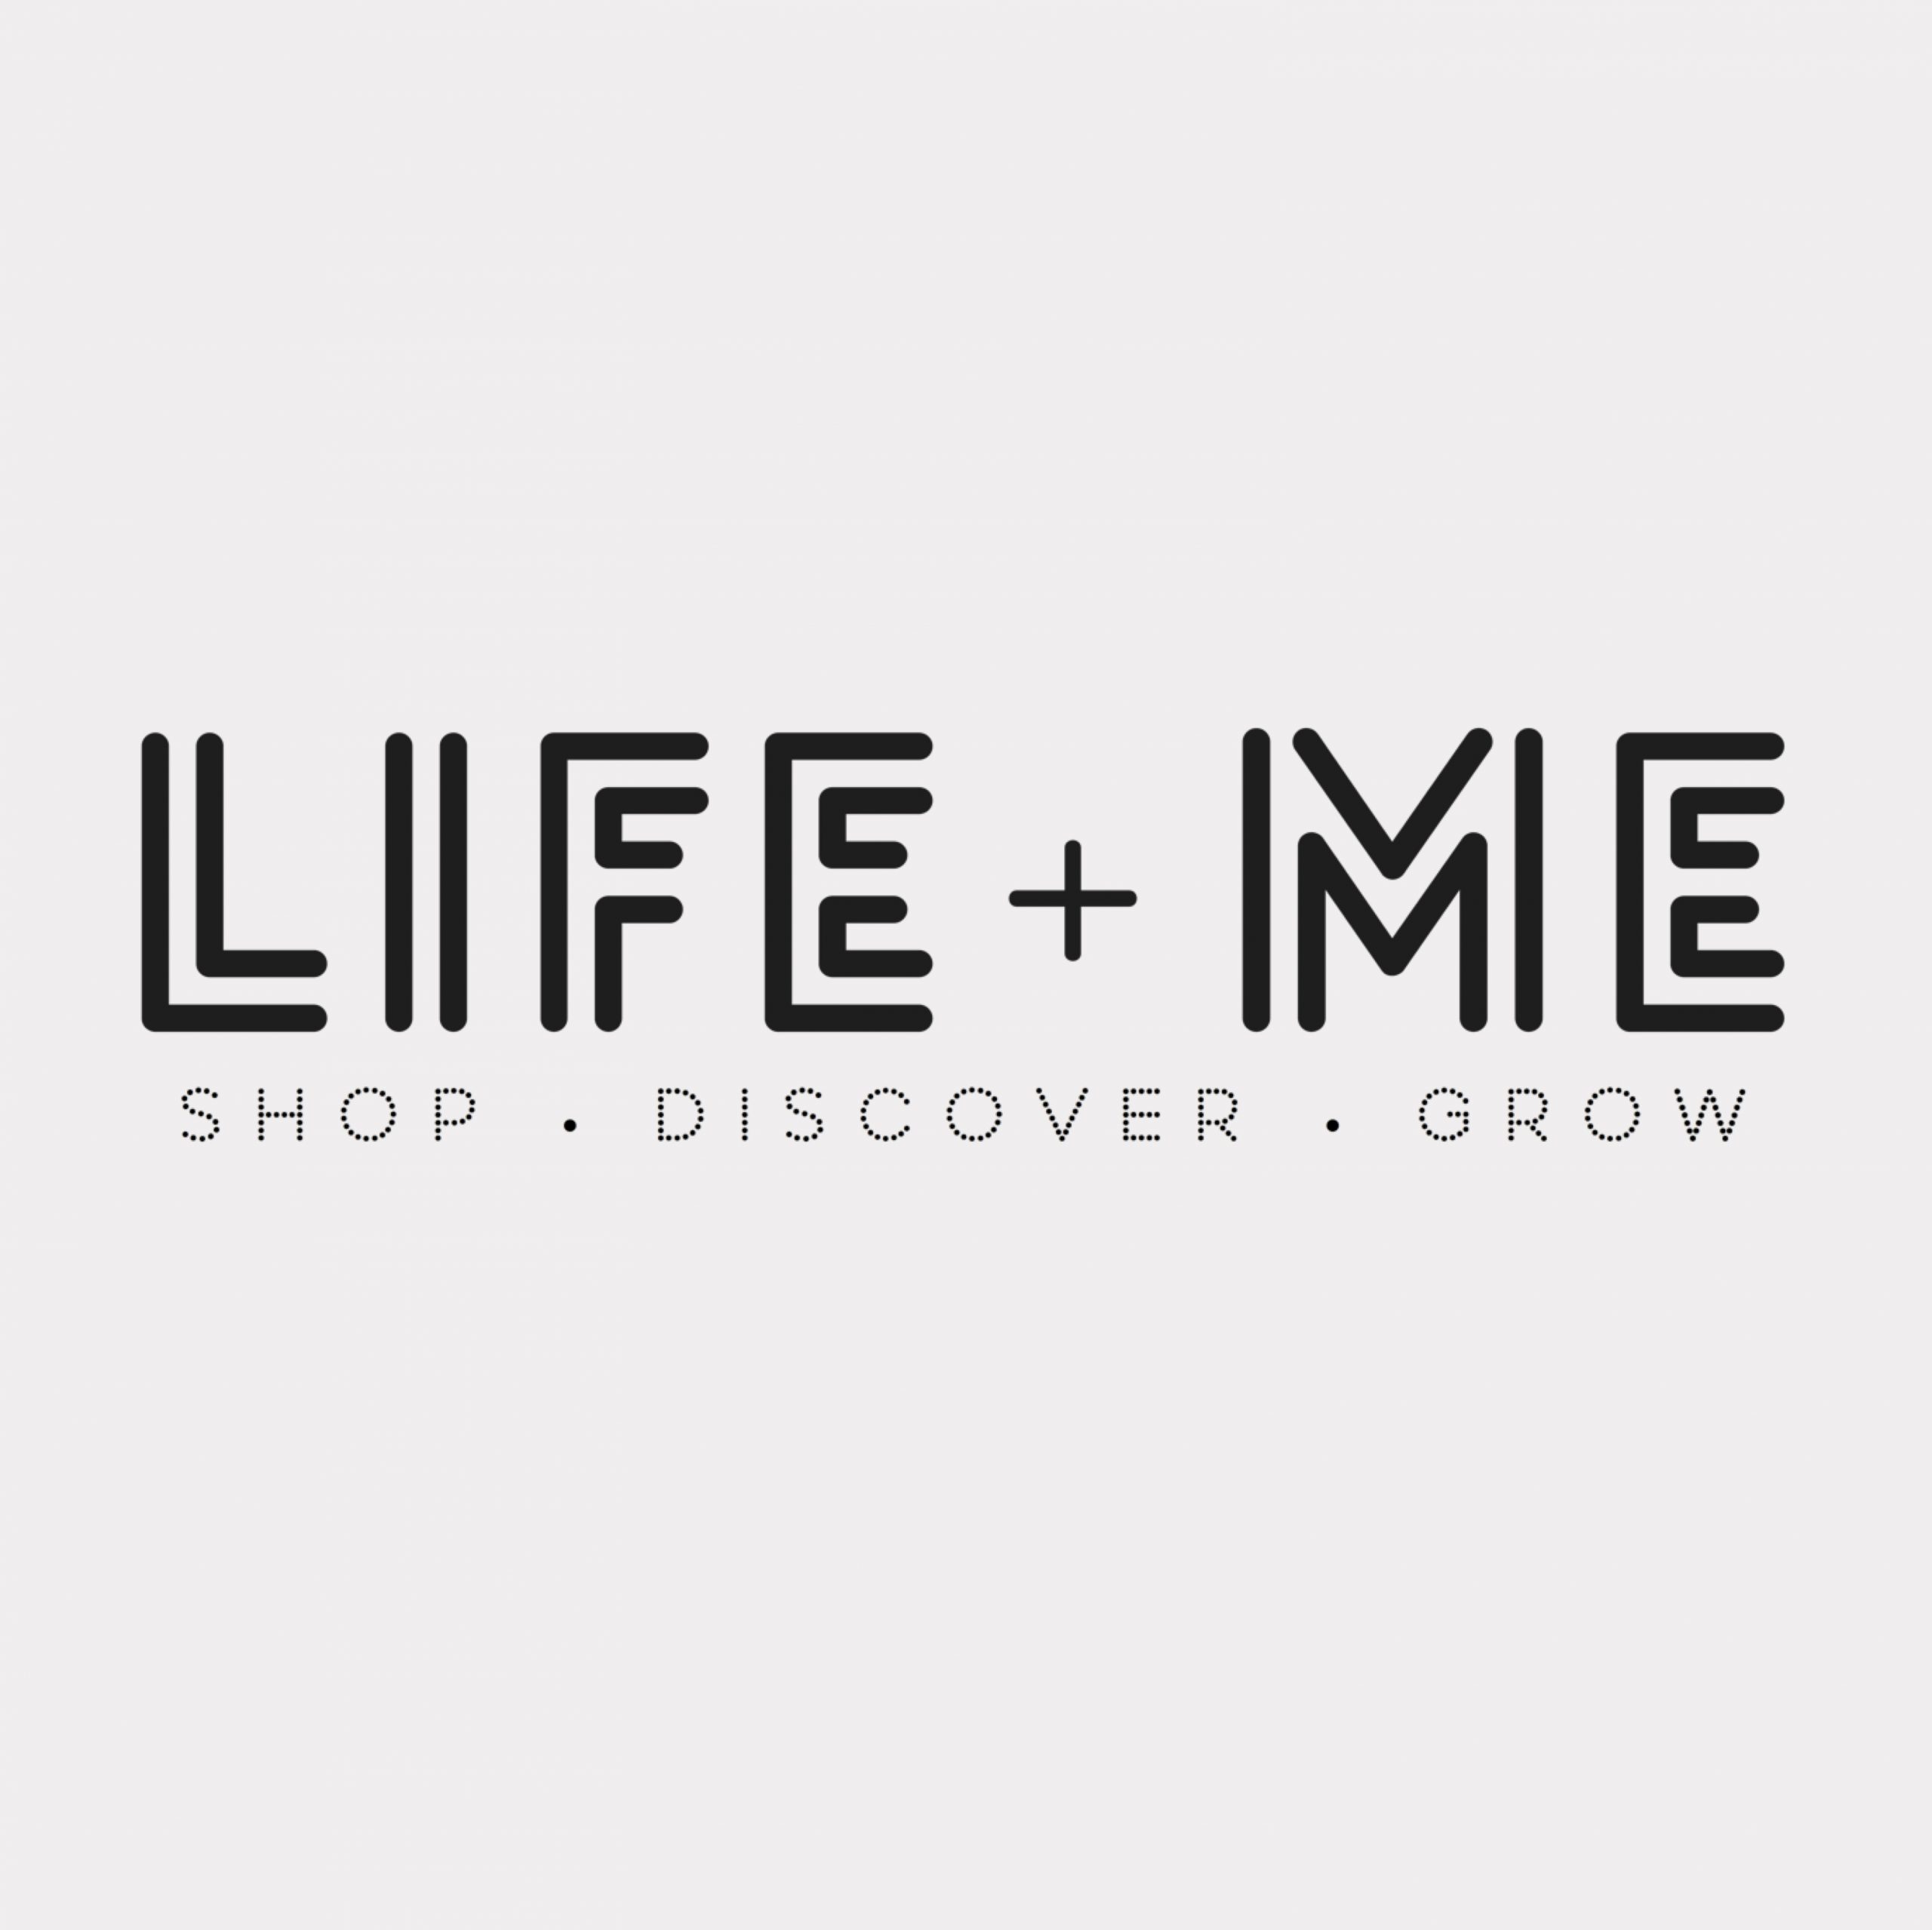 Life site. I Life. RLIFE me. Energy mi Life магазин.